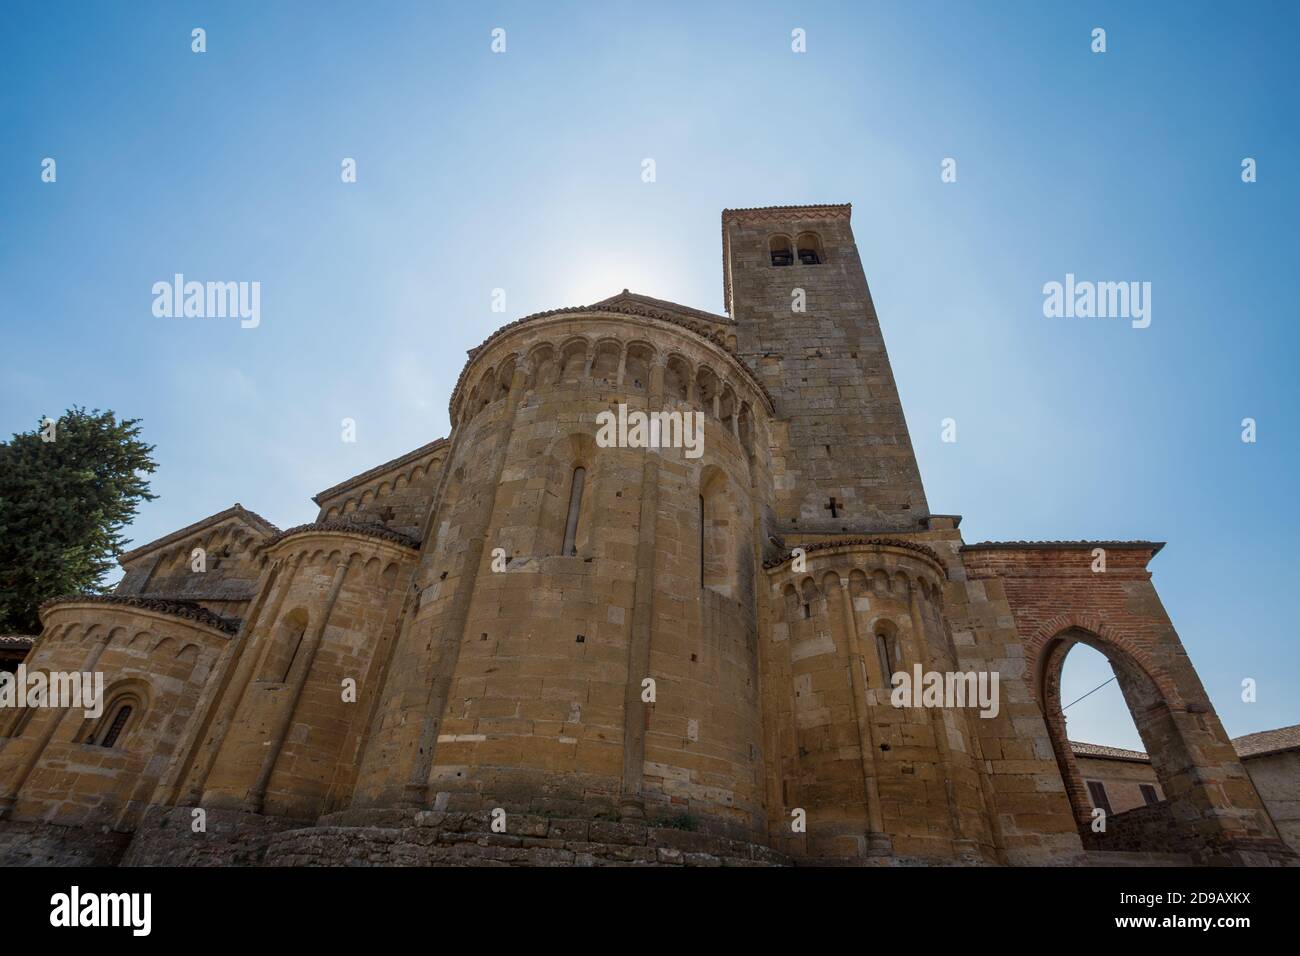 The 'Collegiata' of Santa Maria Assunta in Castell'Arquato, Piacenza province, Emilia Romagna, Italy. Stock Photo